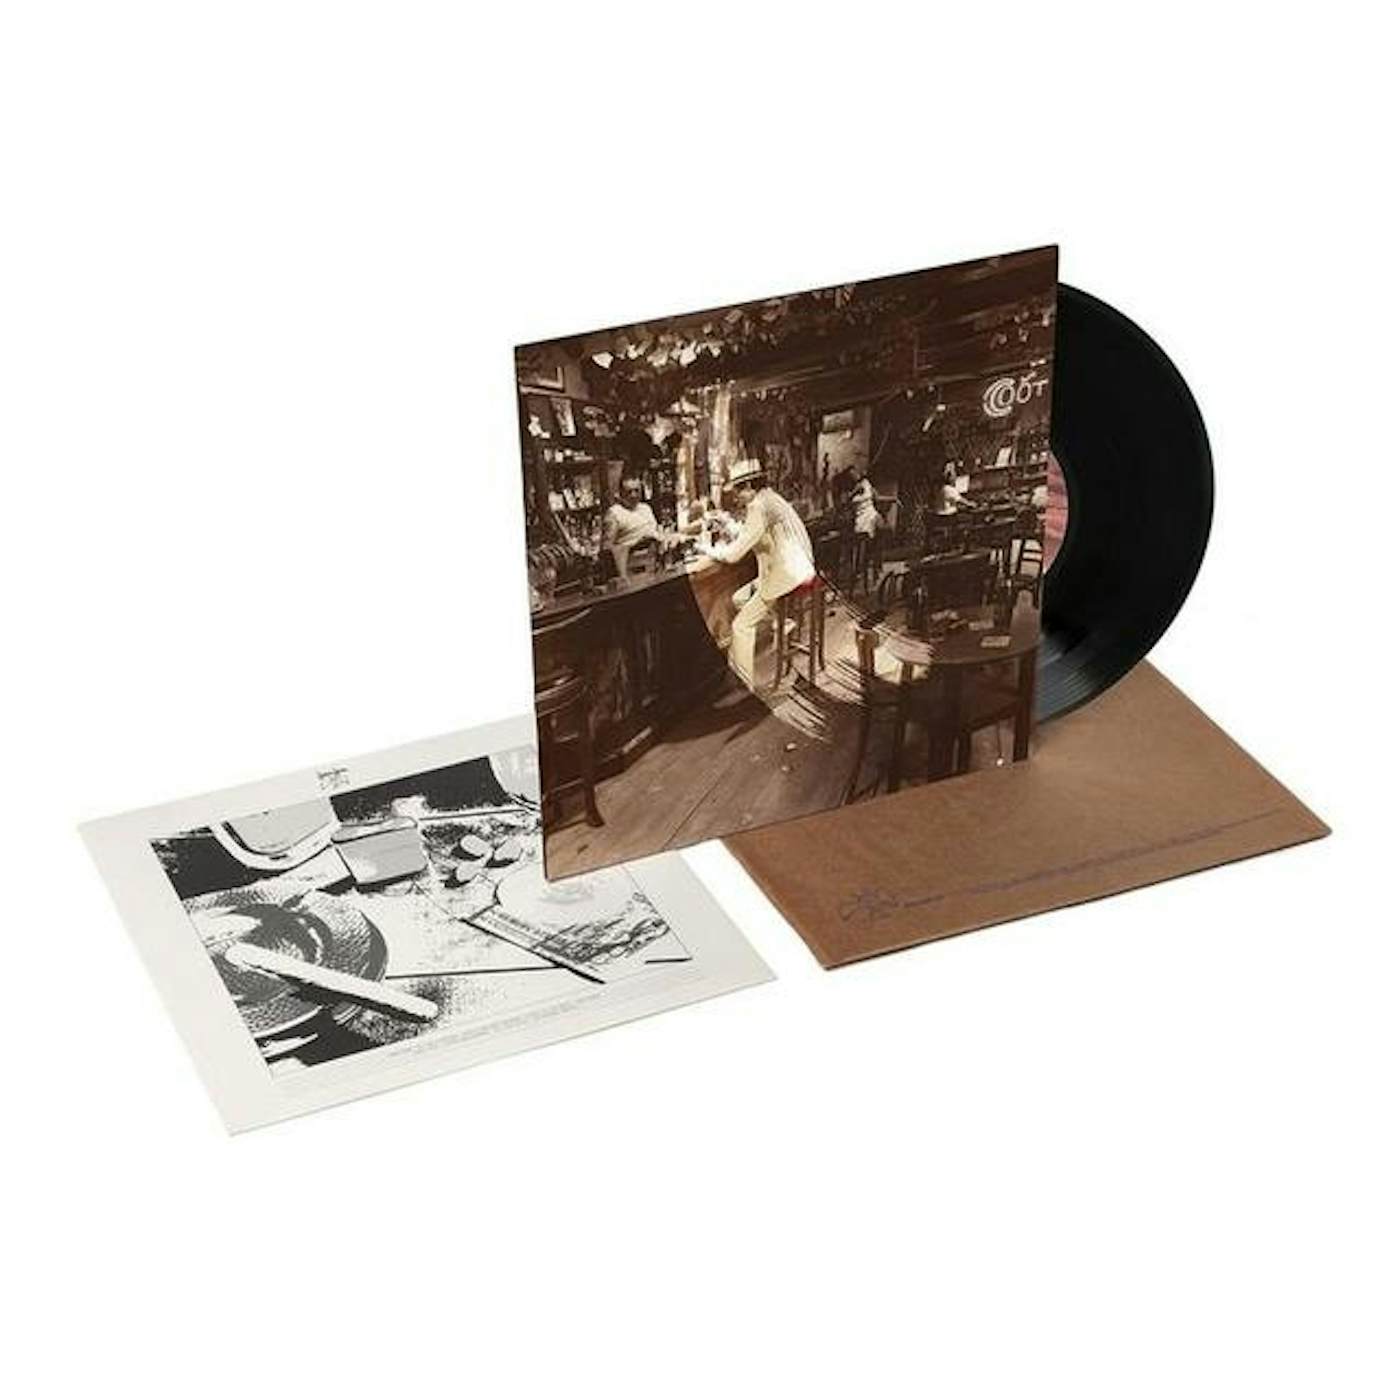 Led Zeppelin In Through The Out Door (Remastered Original Vinyl) LP